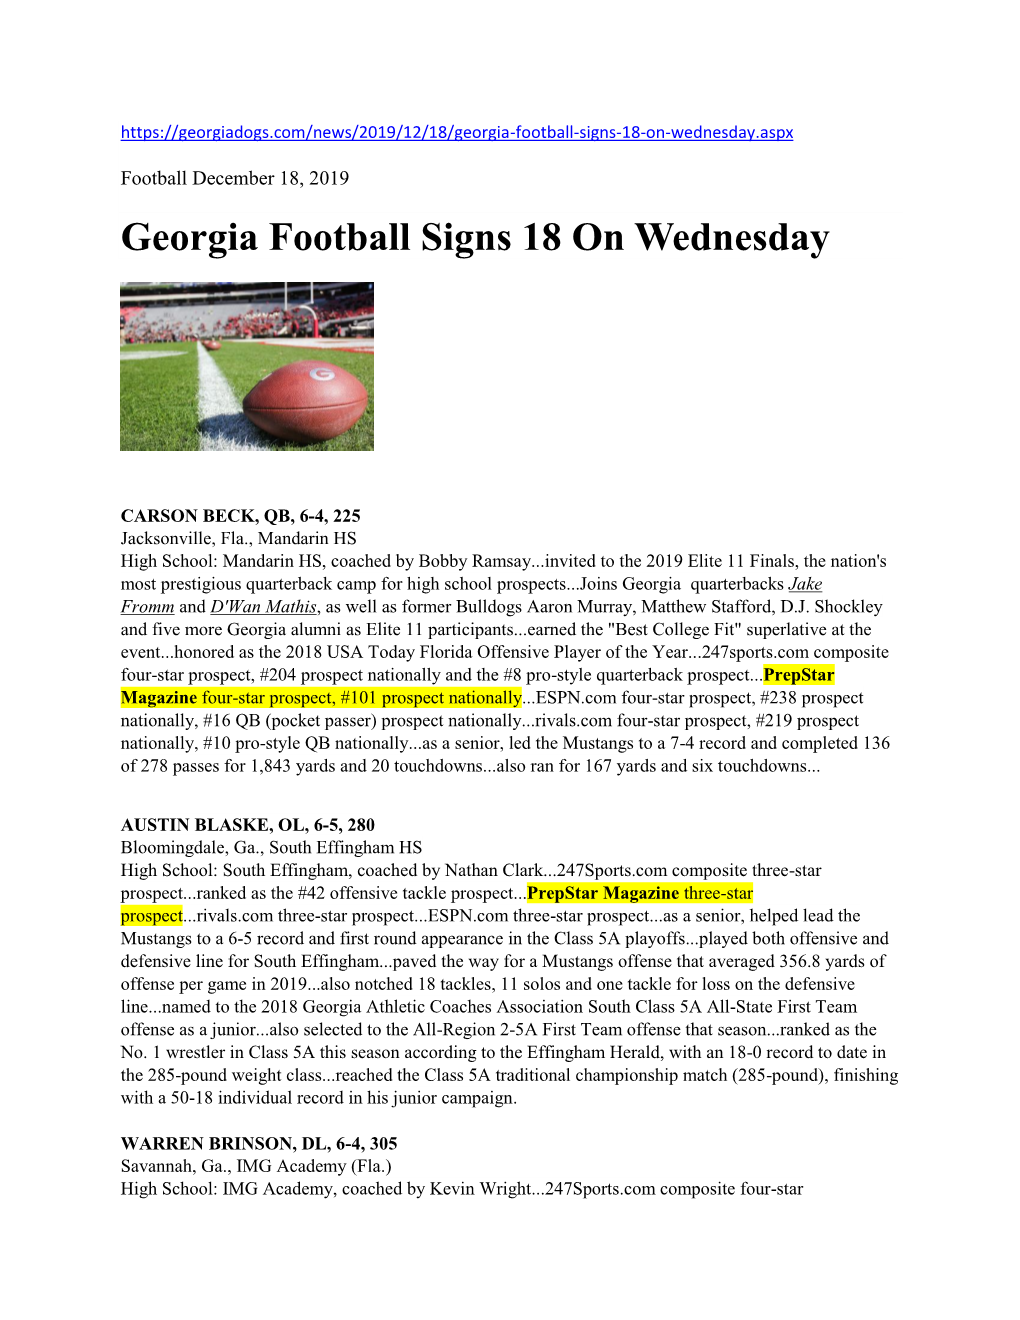 Georgia Football Signs 18 on Wednesday